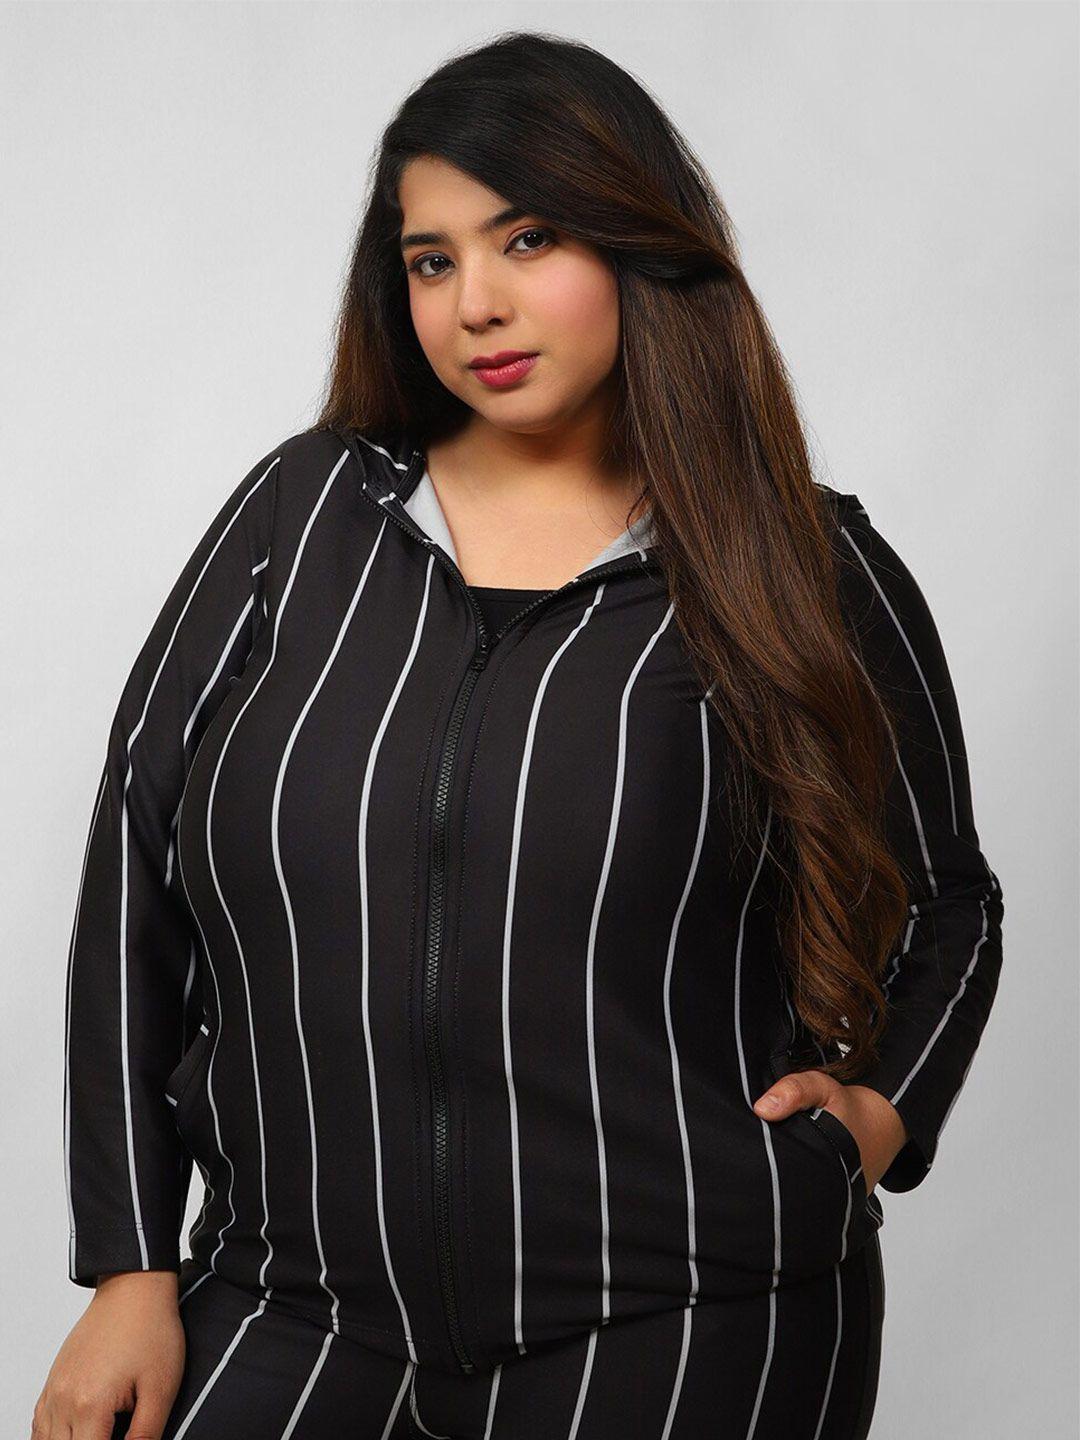 amydus women plus size black white striped hooded sweatshirt